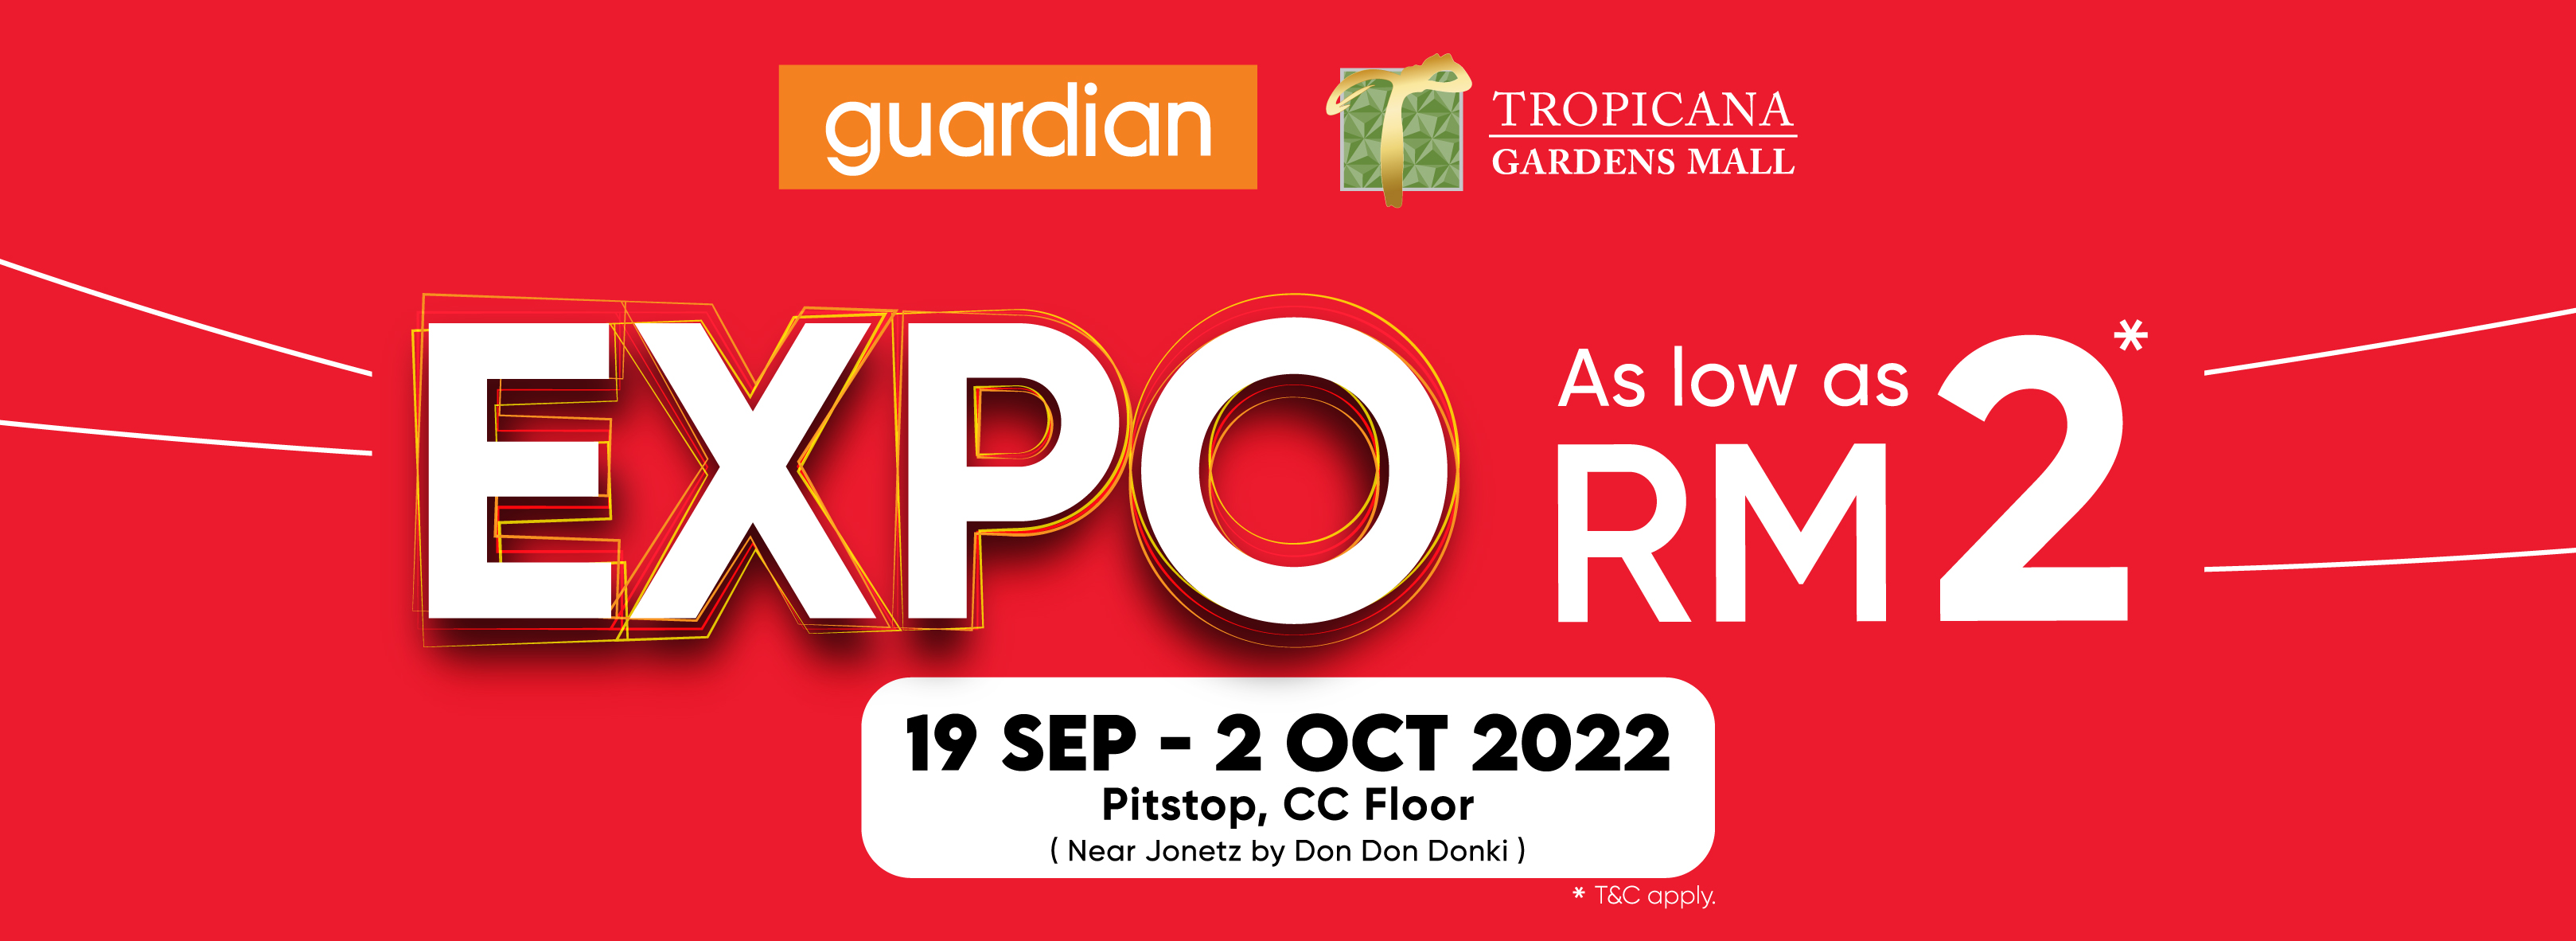 Tropicana Gardens Mall Guardian Expo